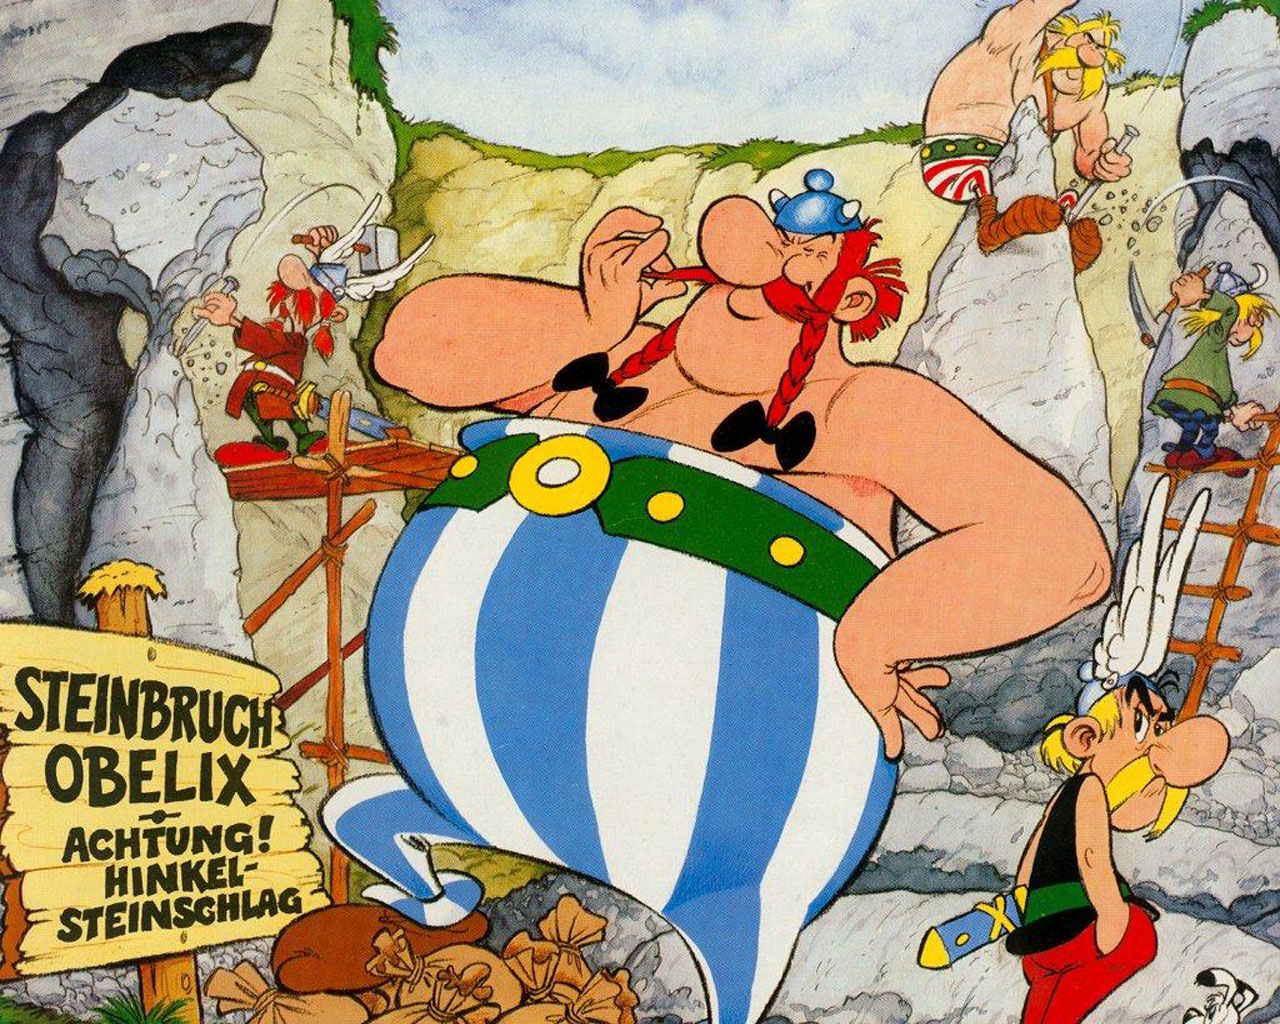 77 Asterix Wallpaper On Wallpapersafari Images, Photos, Reviews